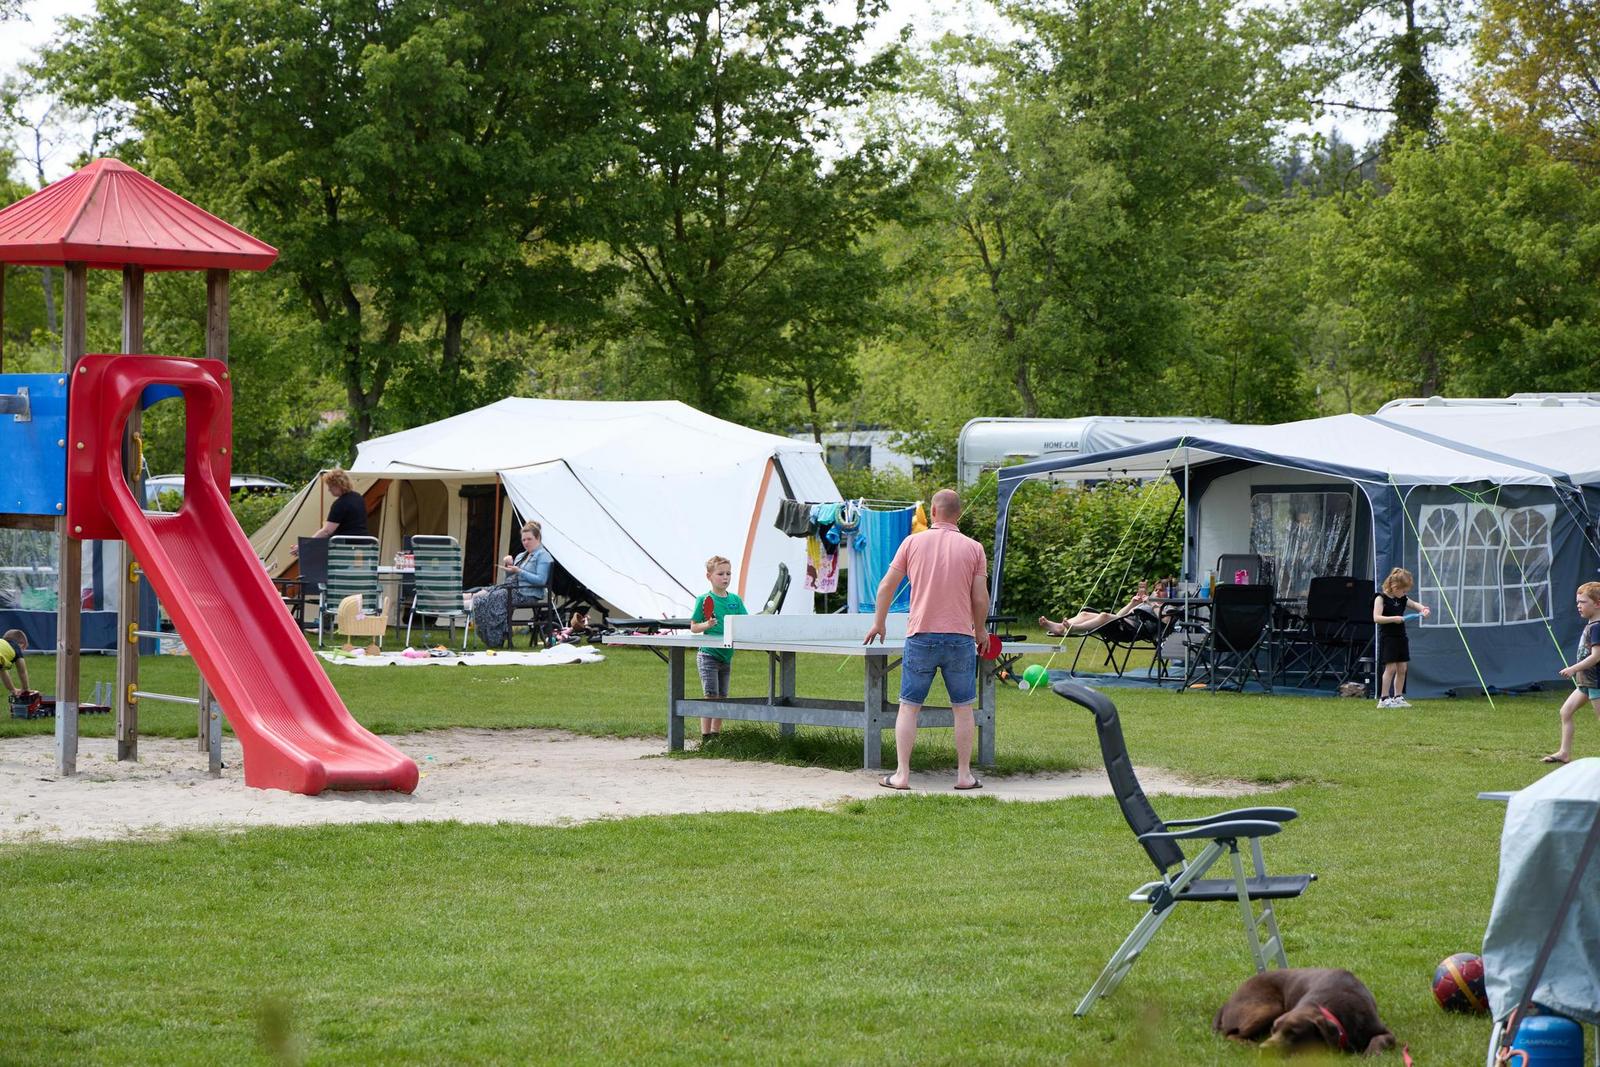 Hemelvaart kampeerplaats huren incl. late check out 20.00 uur.